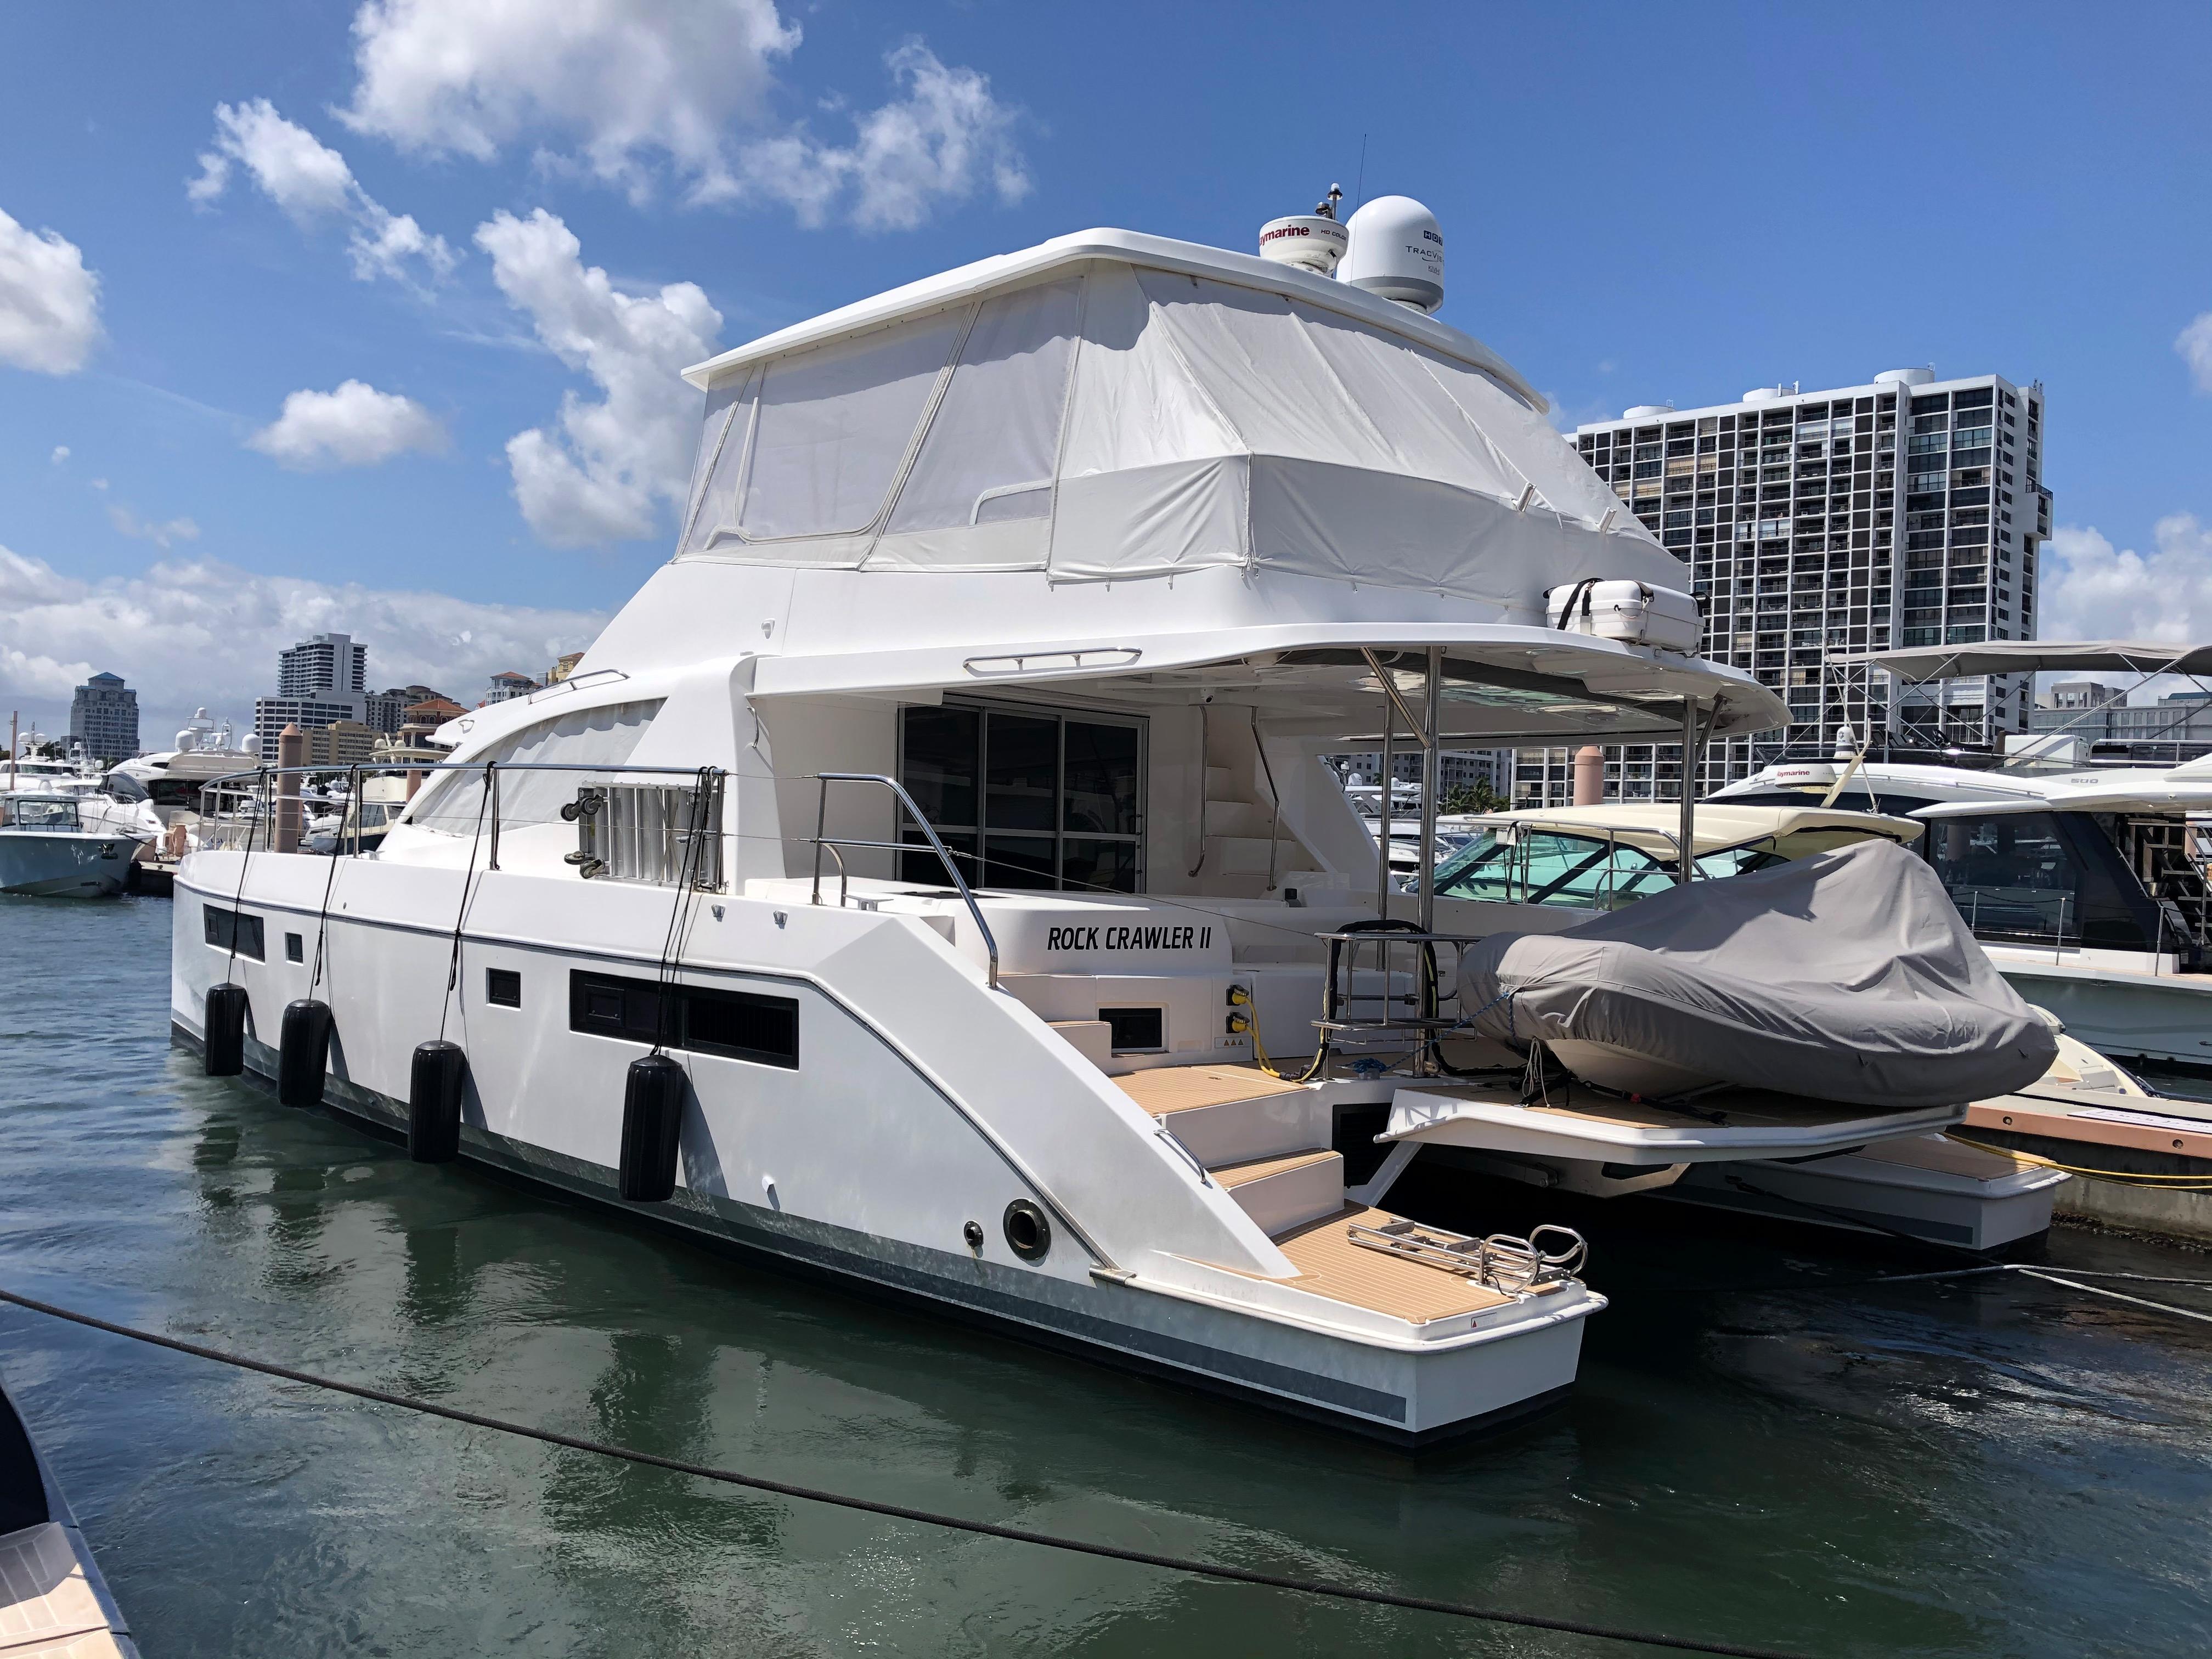 leopard 51 power catamaran for sale